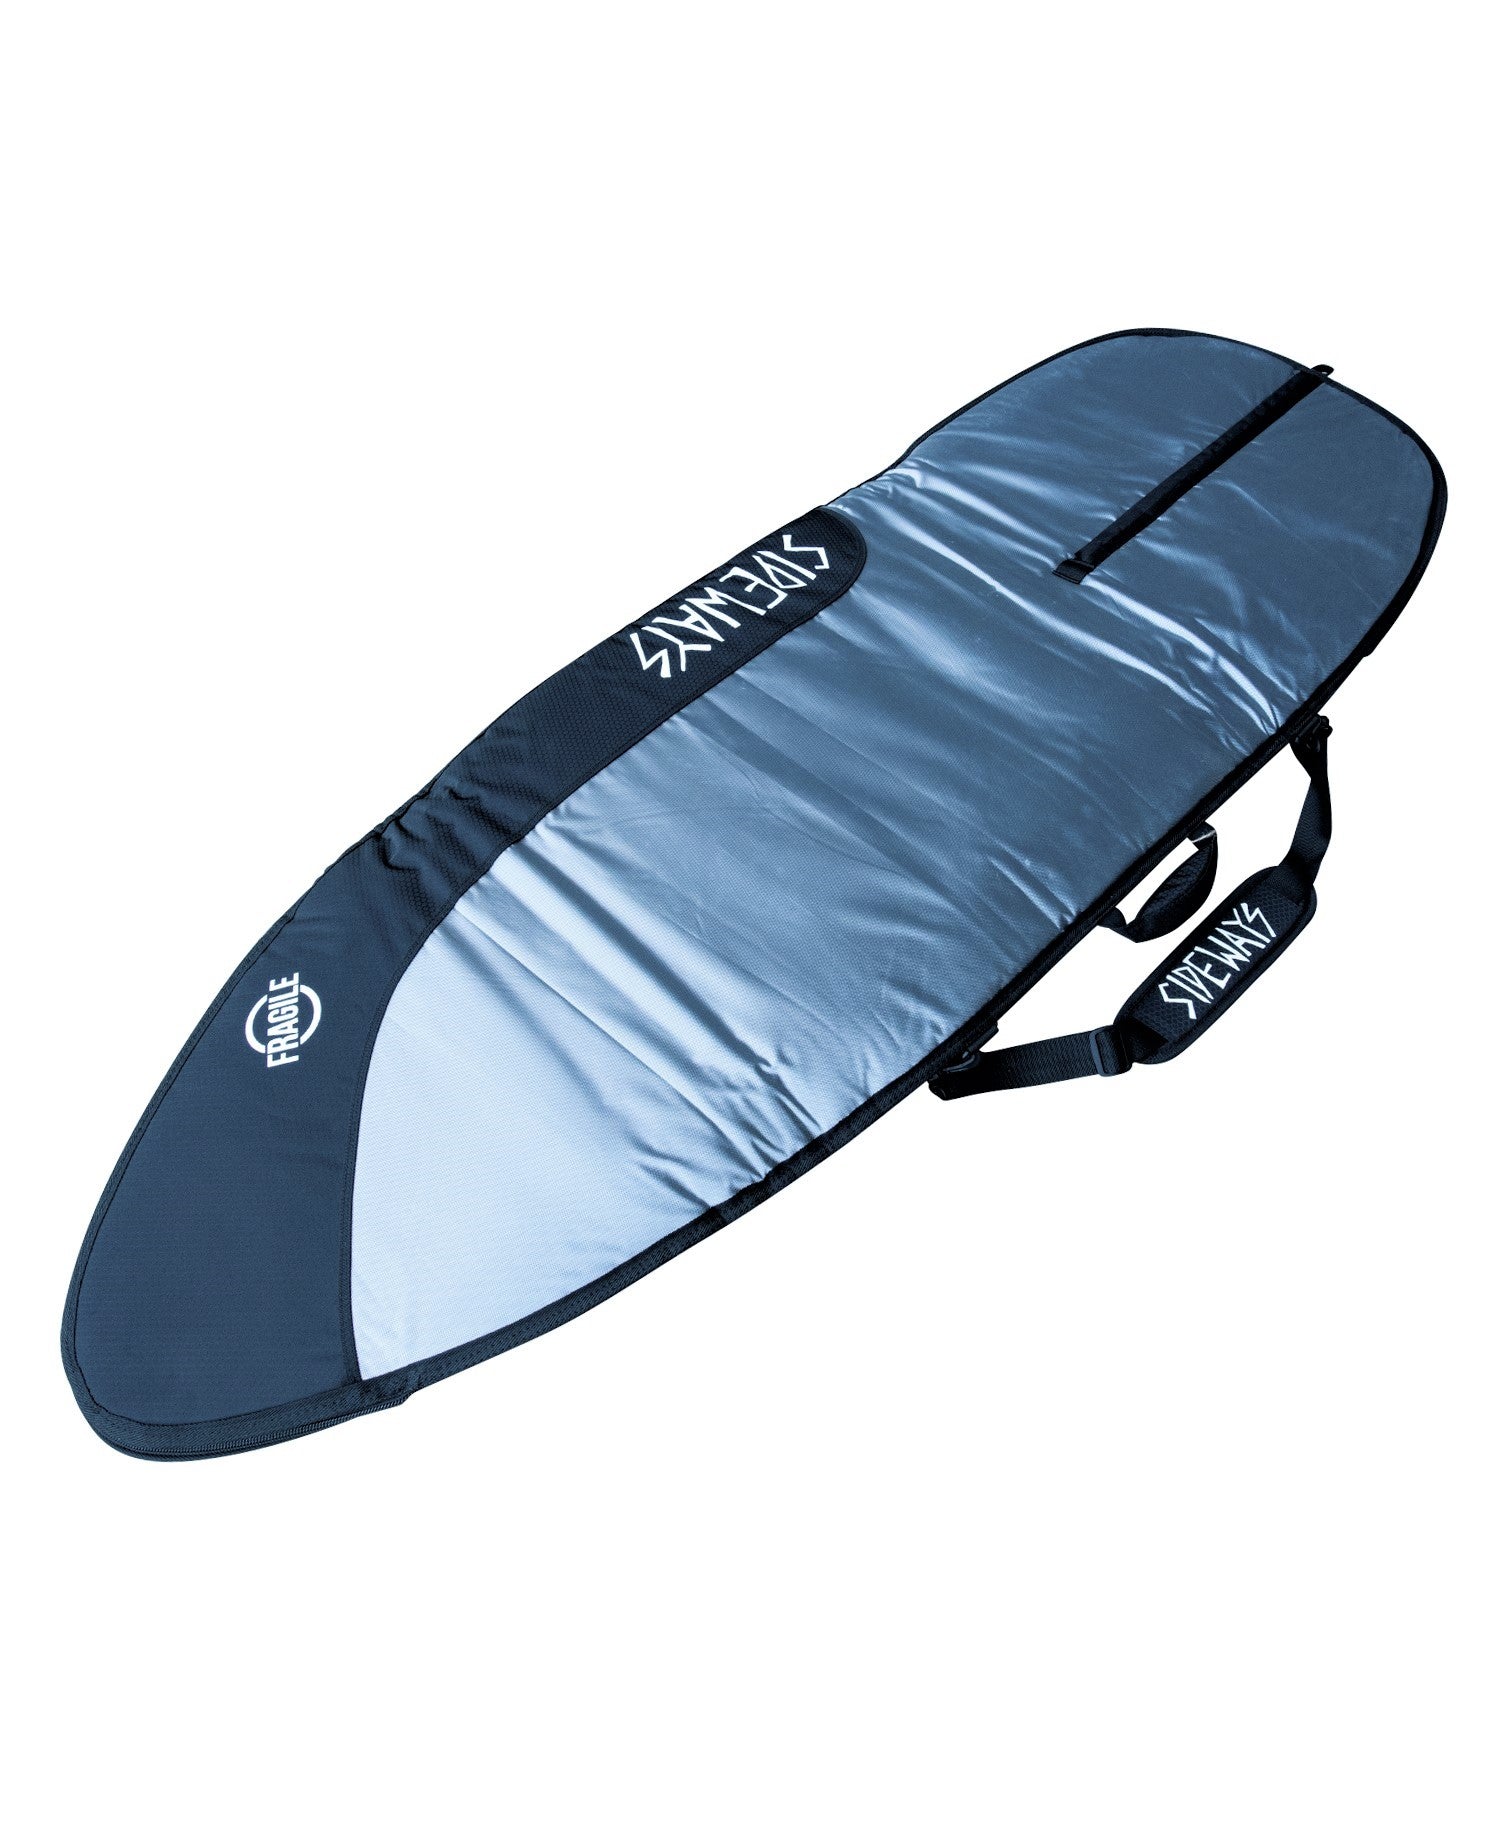 SIDEWAYS DELUXE SURFBOARD TRAVEL BAG